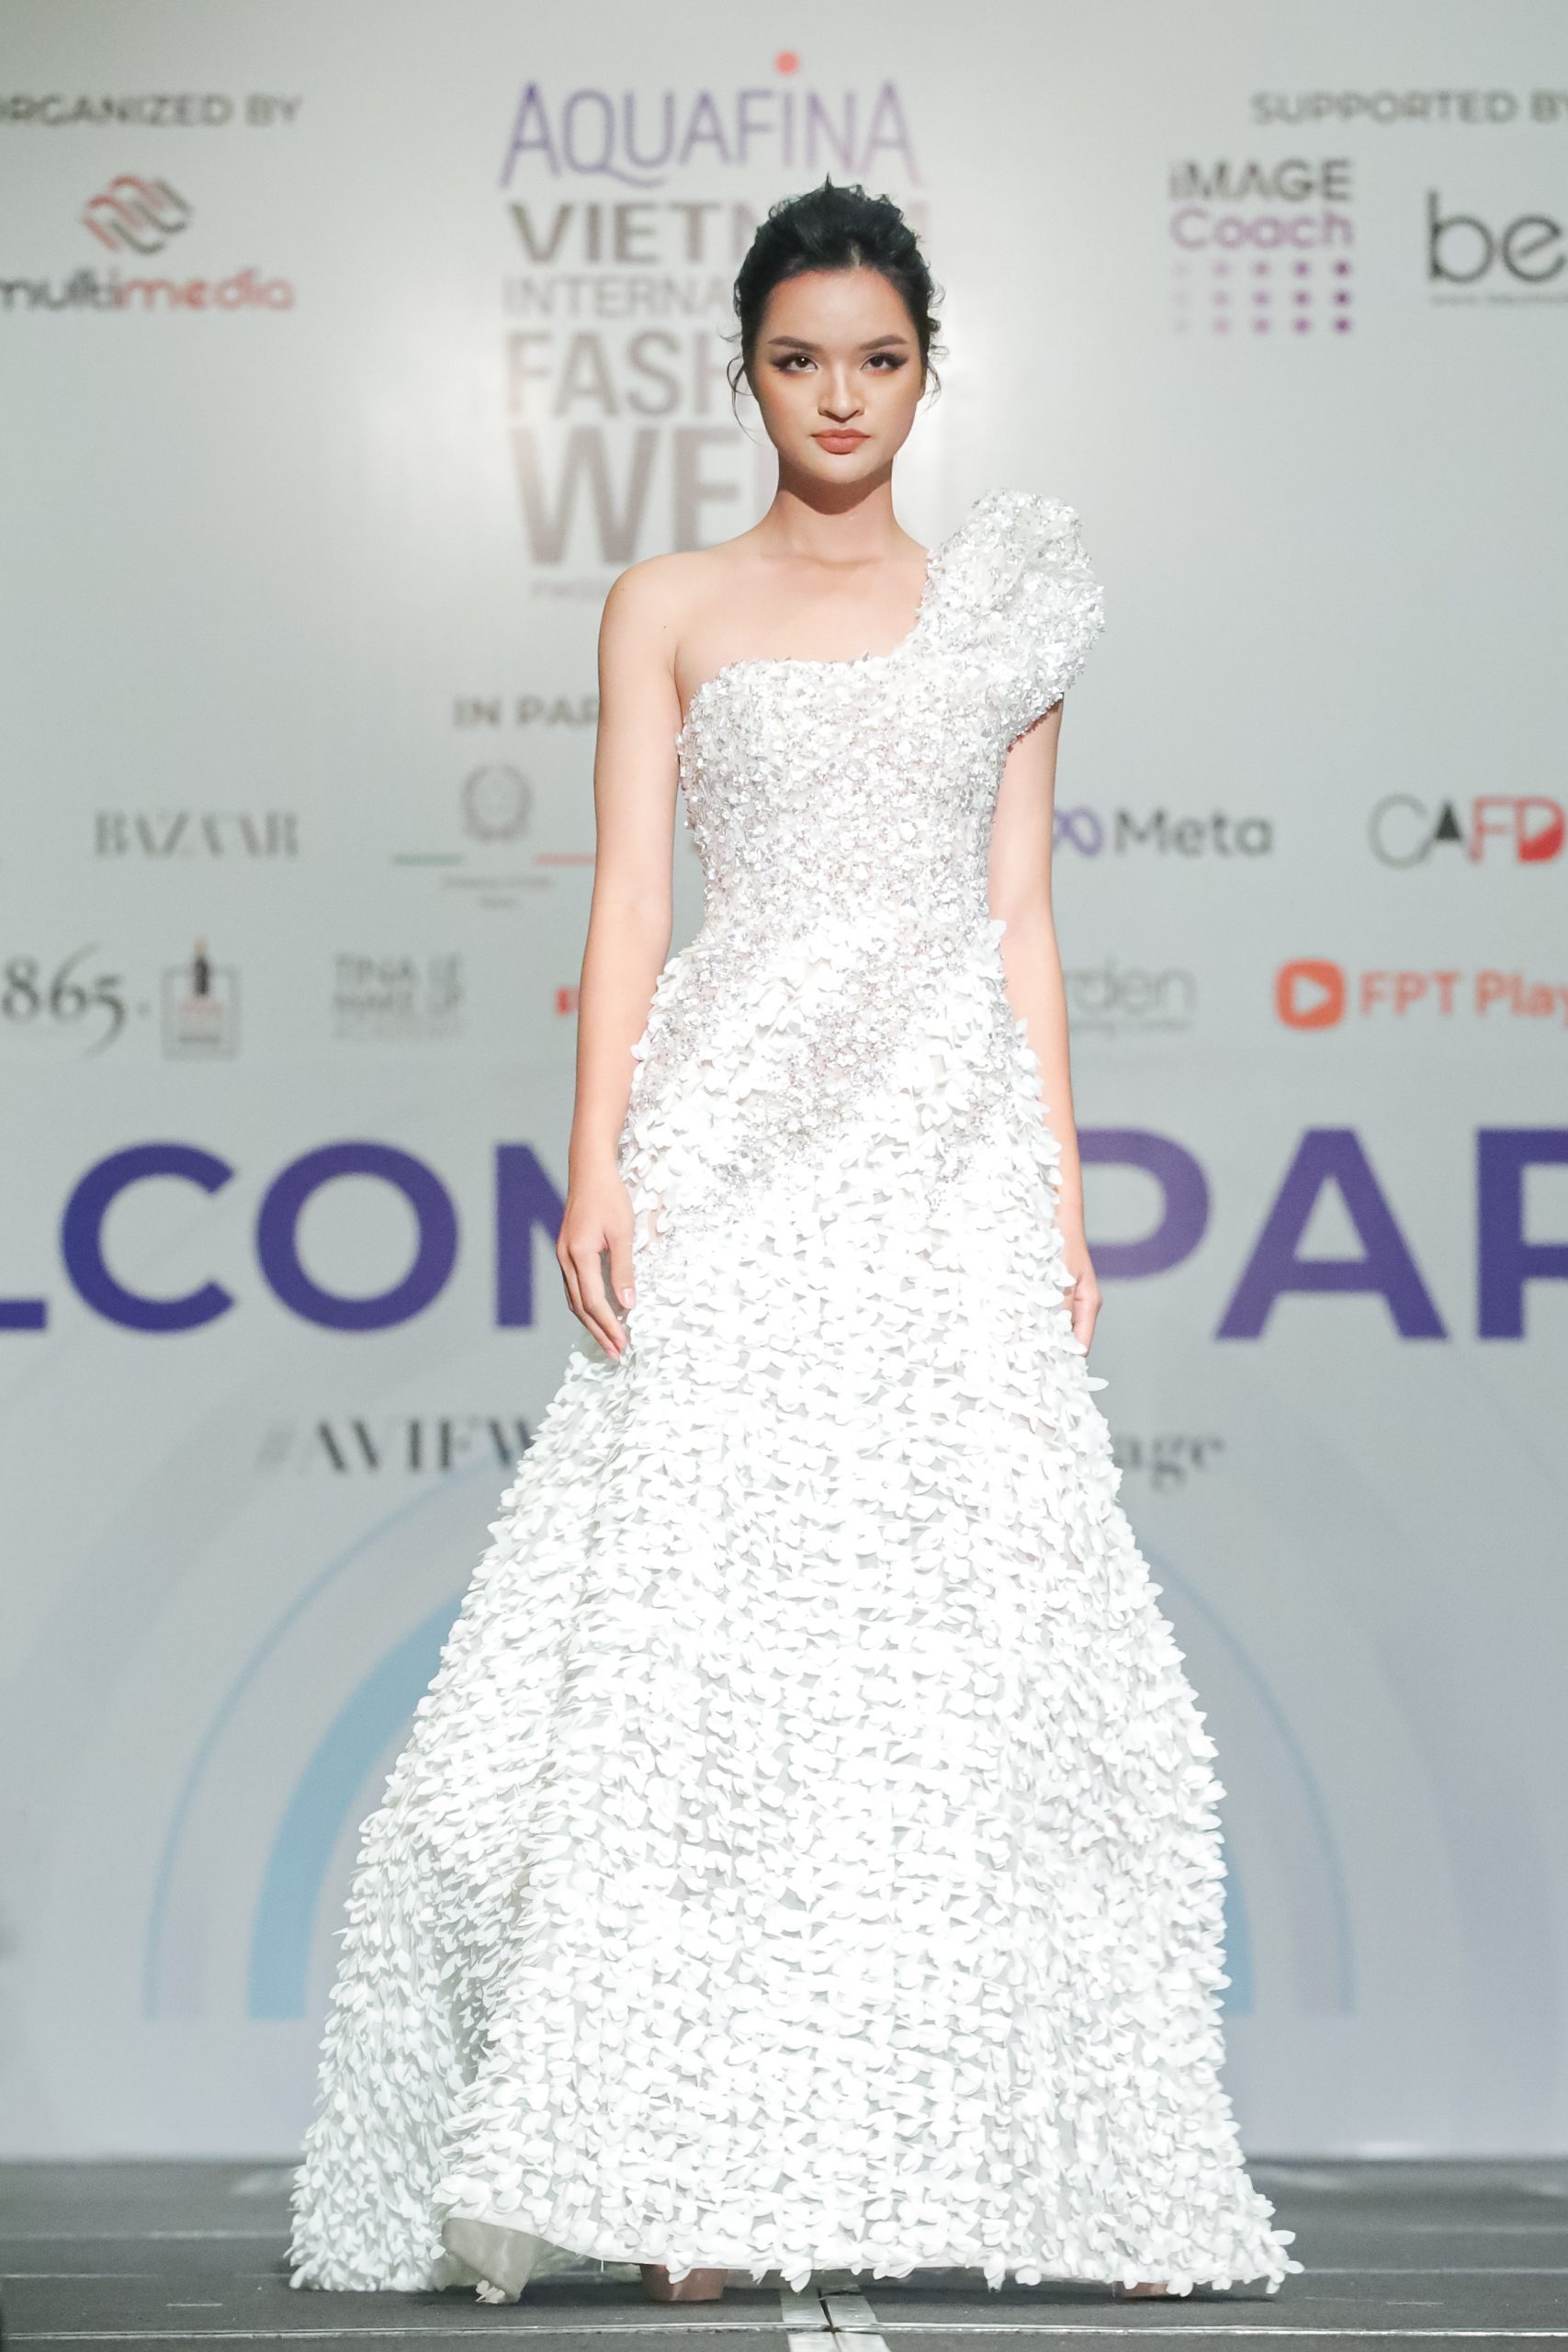 Harper's Bazaar_Aquafina Vietnam International Fashion Week AVIFW_01